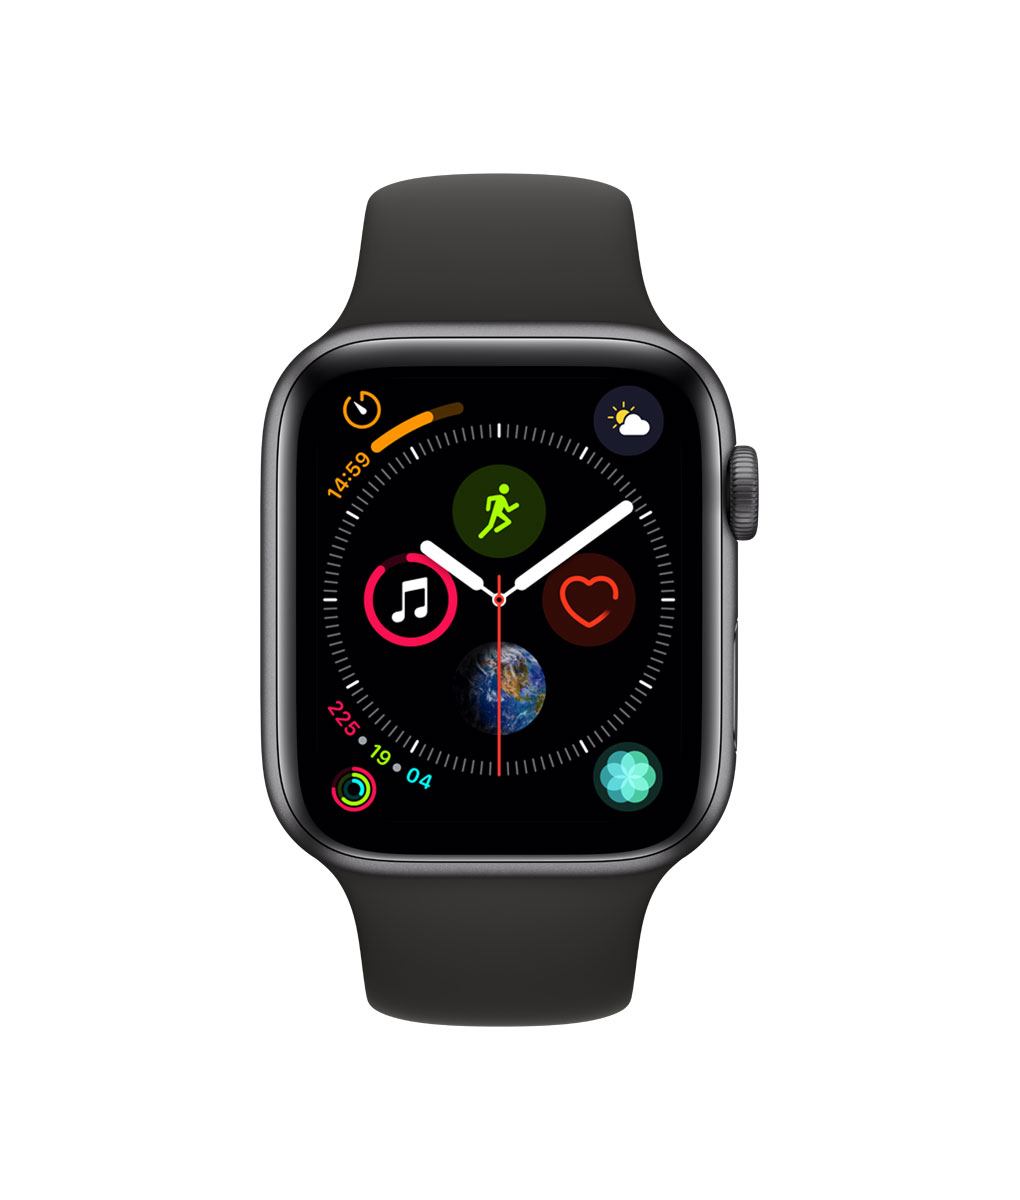 Apple Watch 4 Grey Band Flash Sales, 57% OFF | www.alforja.cat